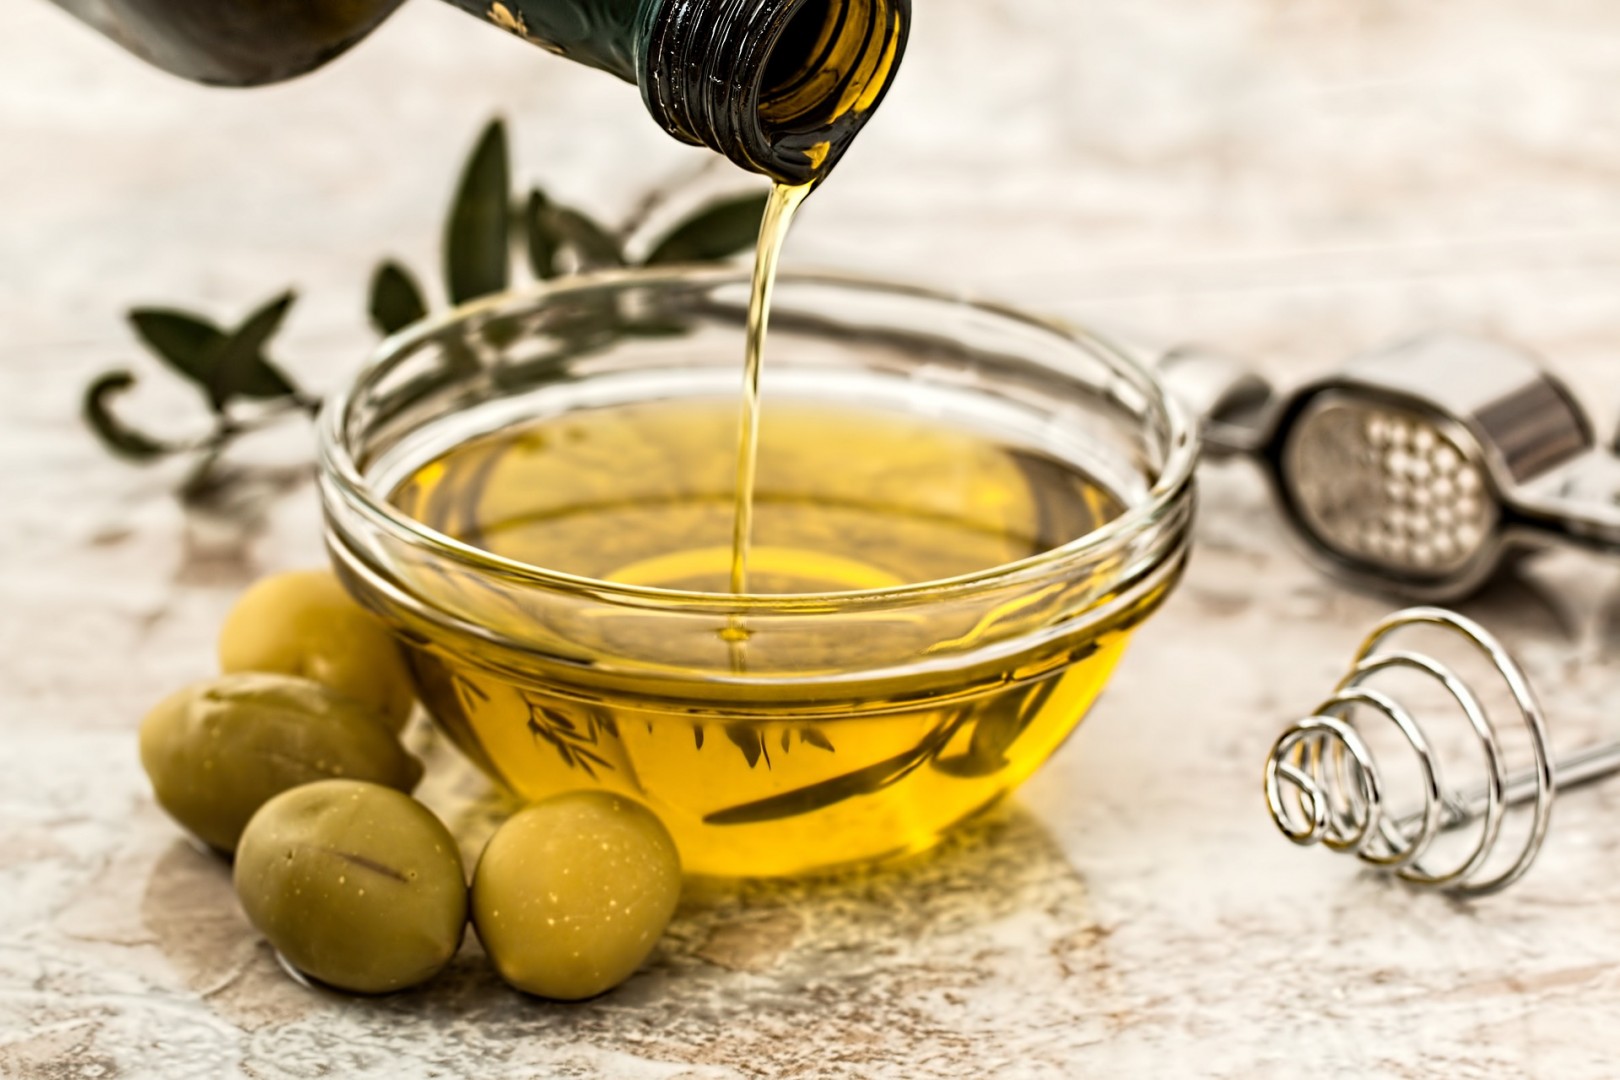 zdrowa oliwa z oliwek